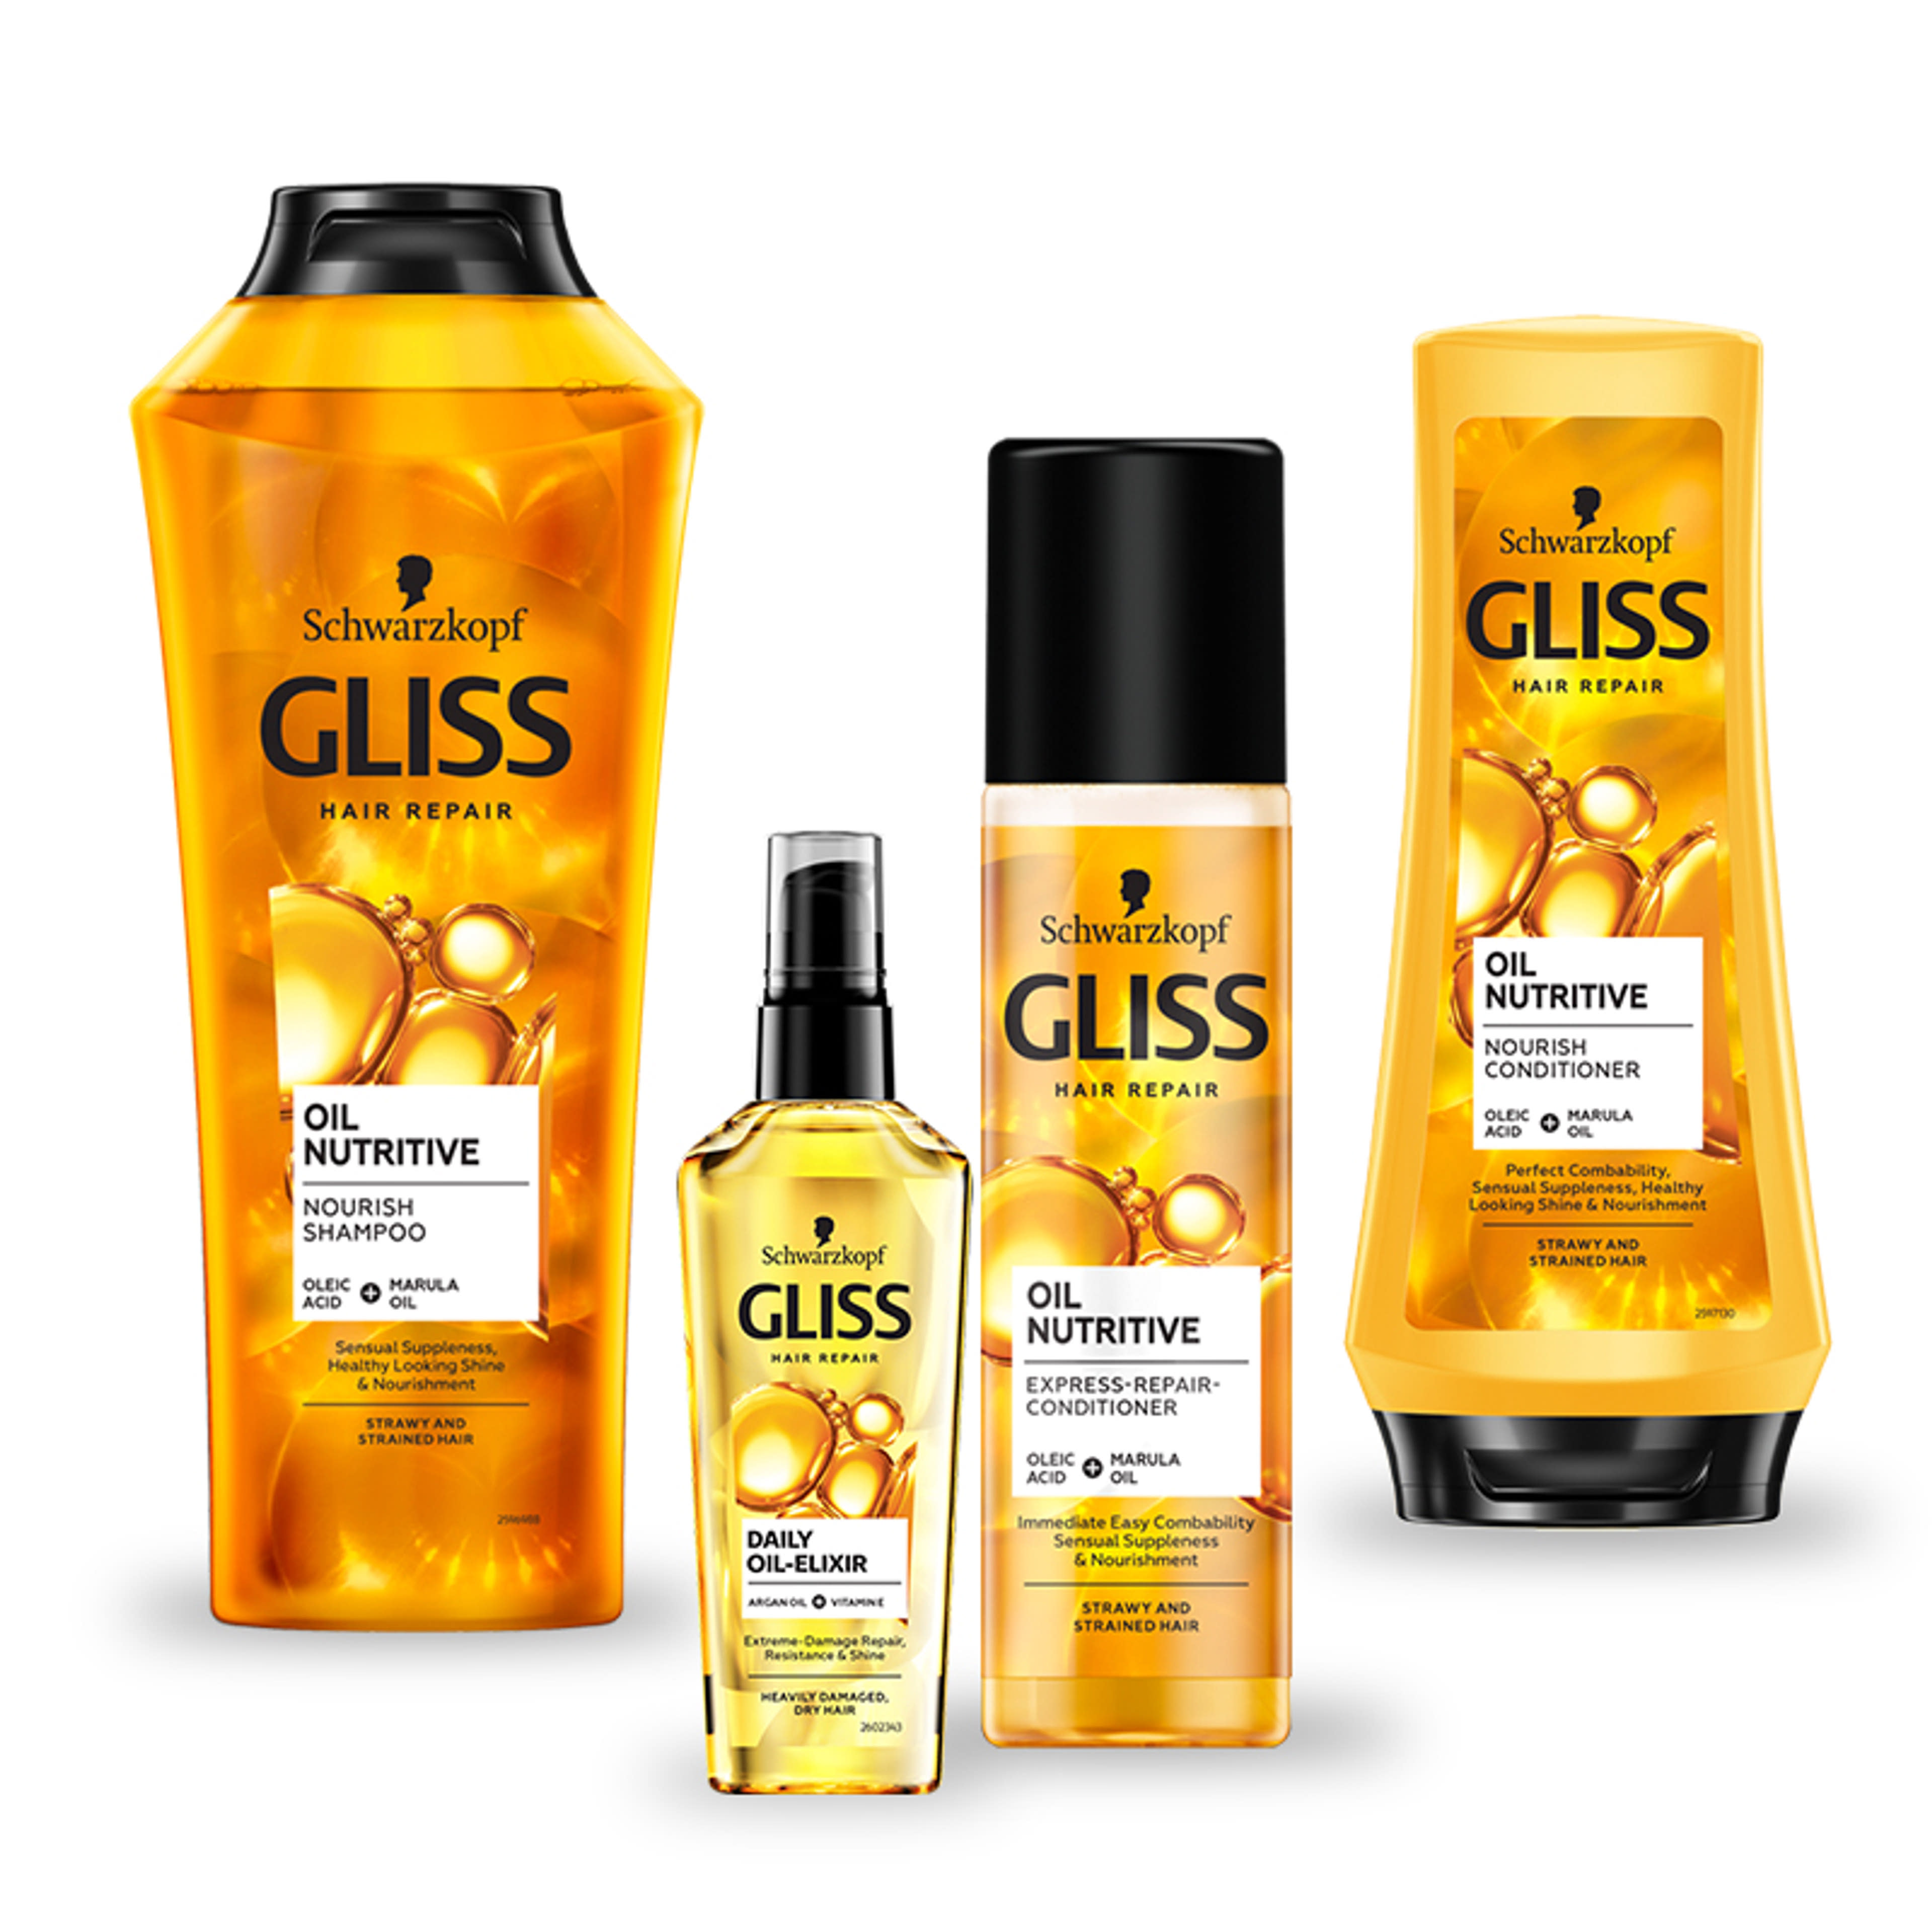 Gliss Oil Nutritive hajápolási csomag-1